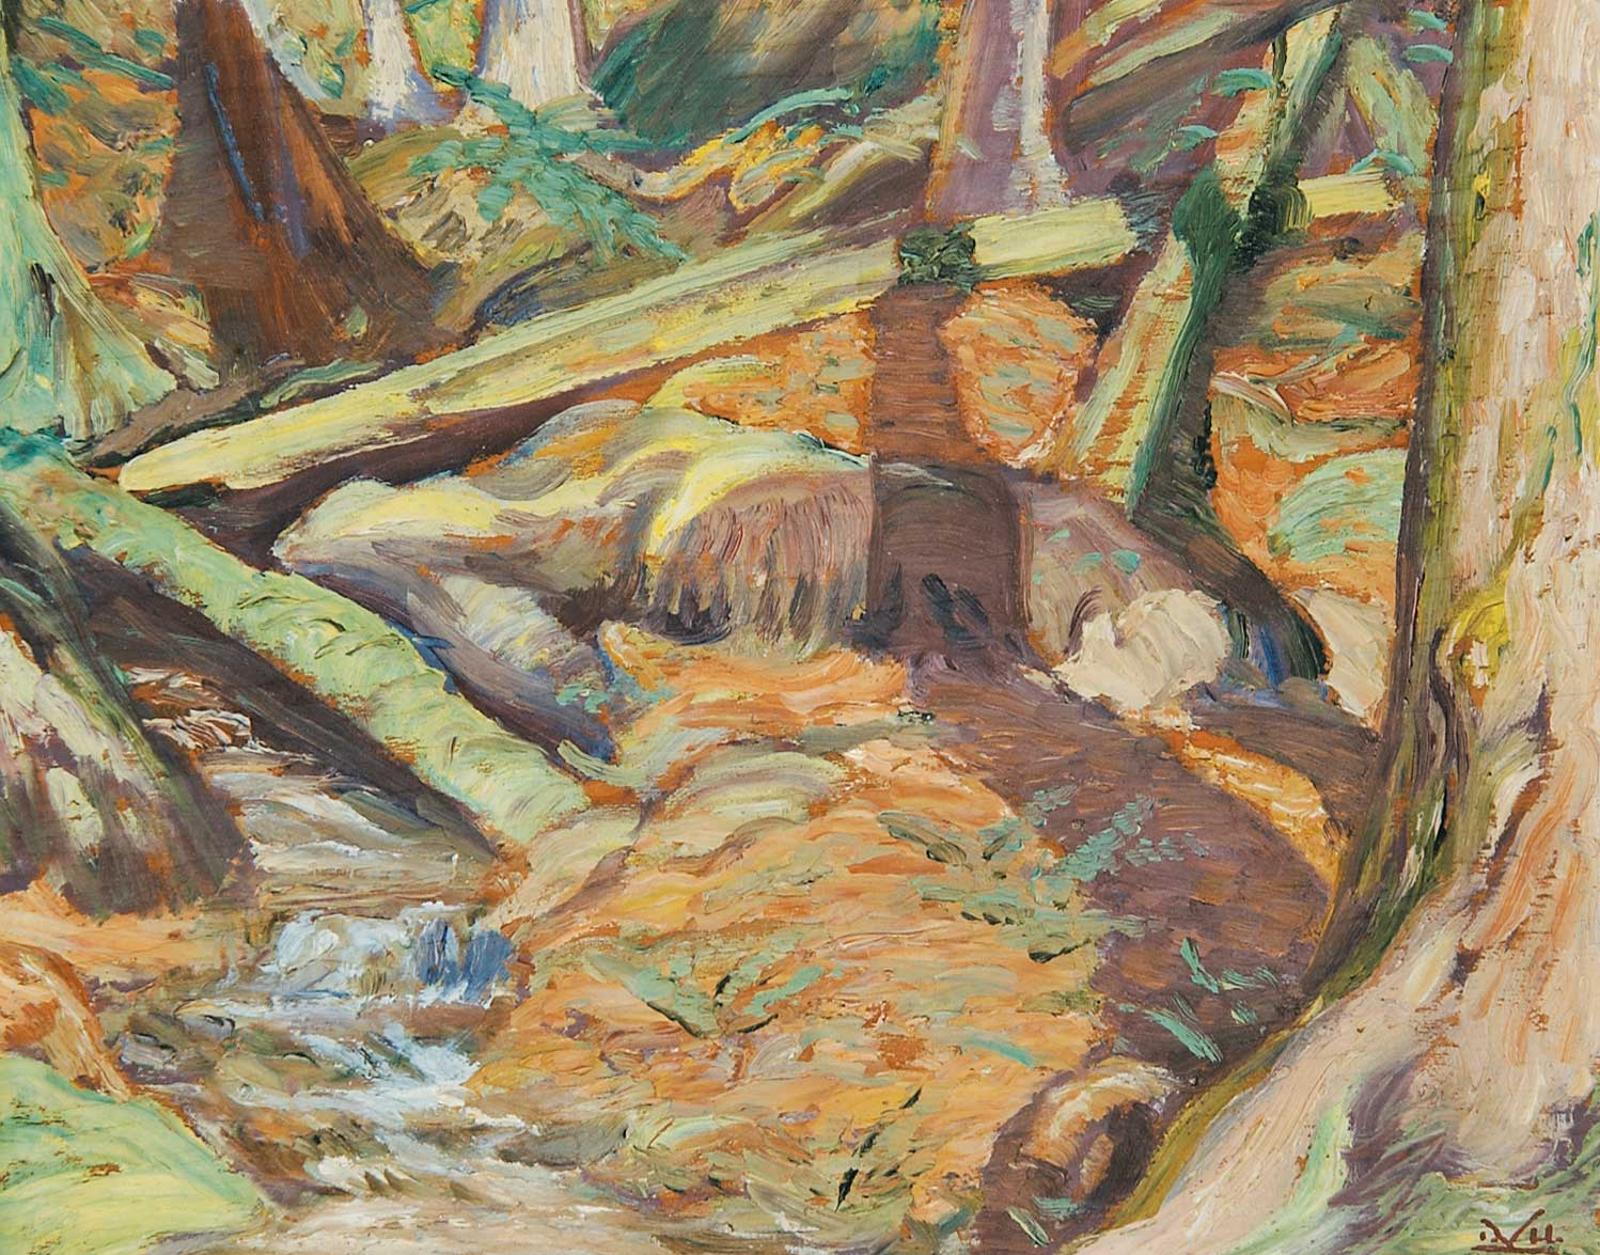 Illingworth Holey (Buck) Kerr (1905-1989) - Mossy Logs, Cultus Lake